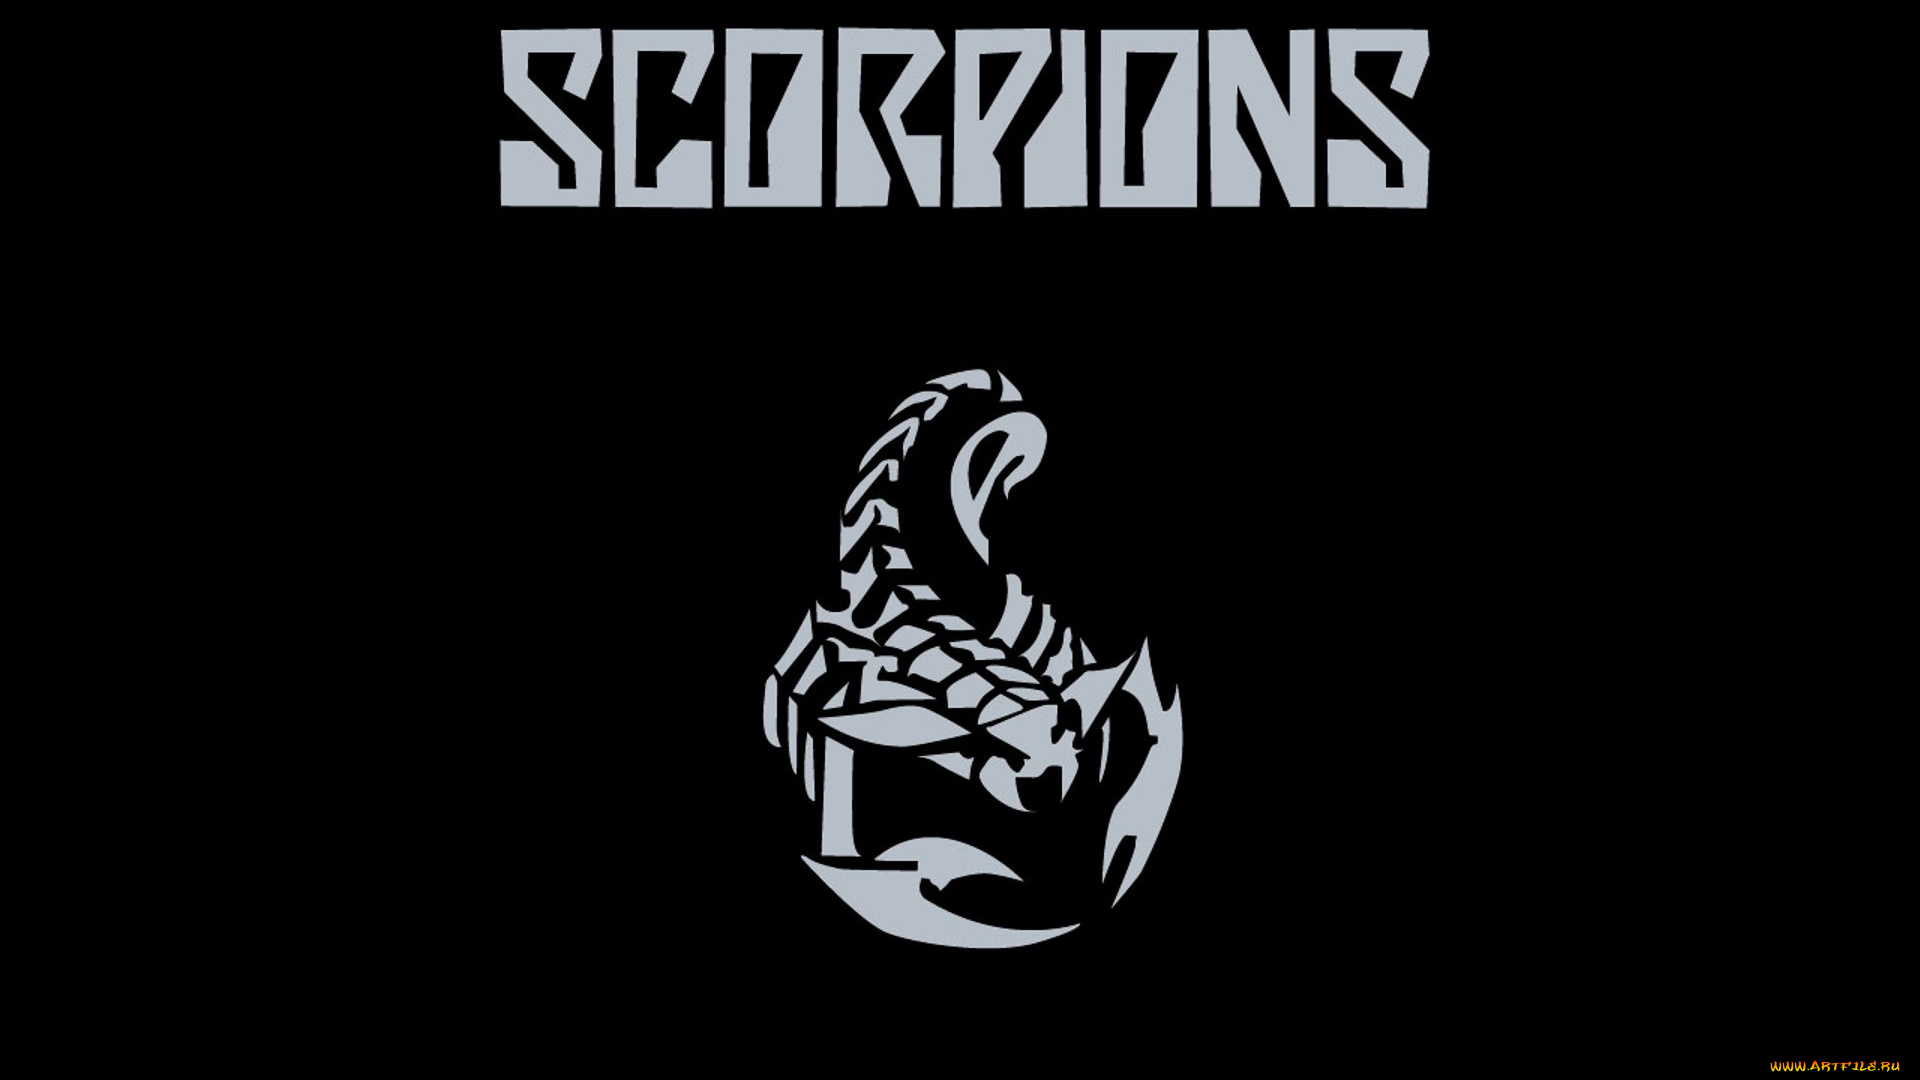 Scorpions somewhere